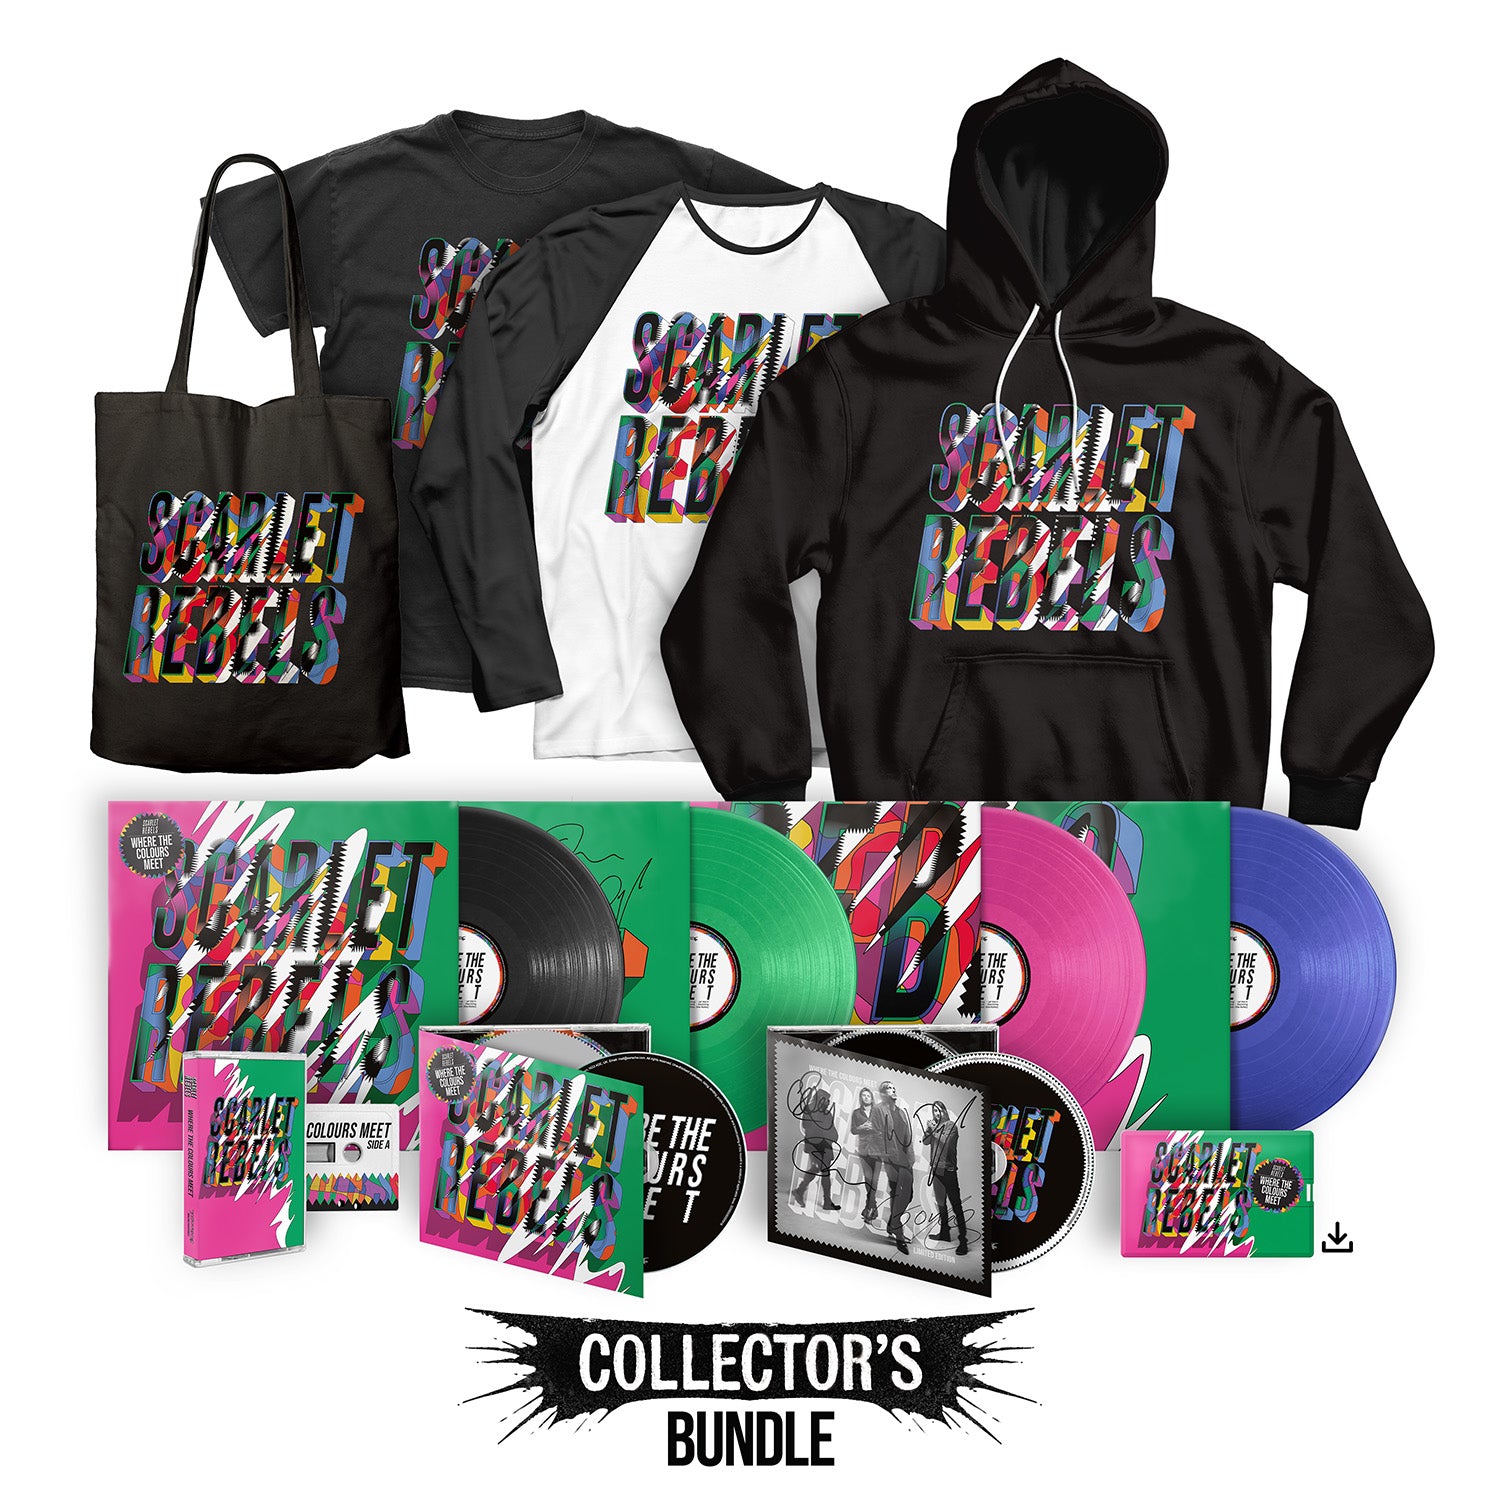 Scarlet Rebels "Where The Colours Meet" Collector's Bundle - 4 Vinyl LPs, Signed CD, Regular CD, Cassette Tape, USB, T shirt, Long Sleeve, Hoodie, Tote Bag & Download - PRE-ORDER